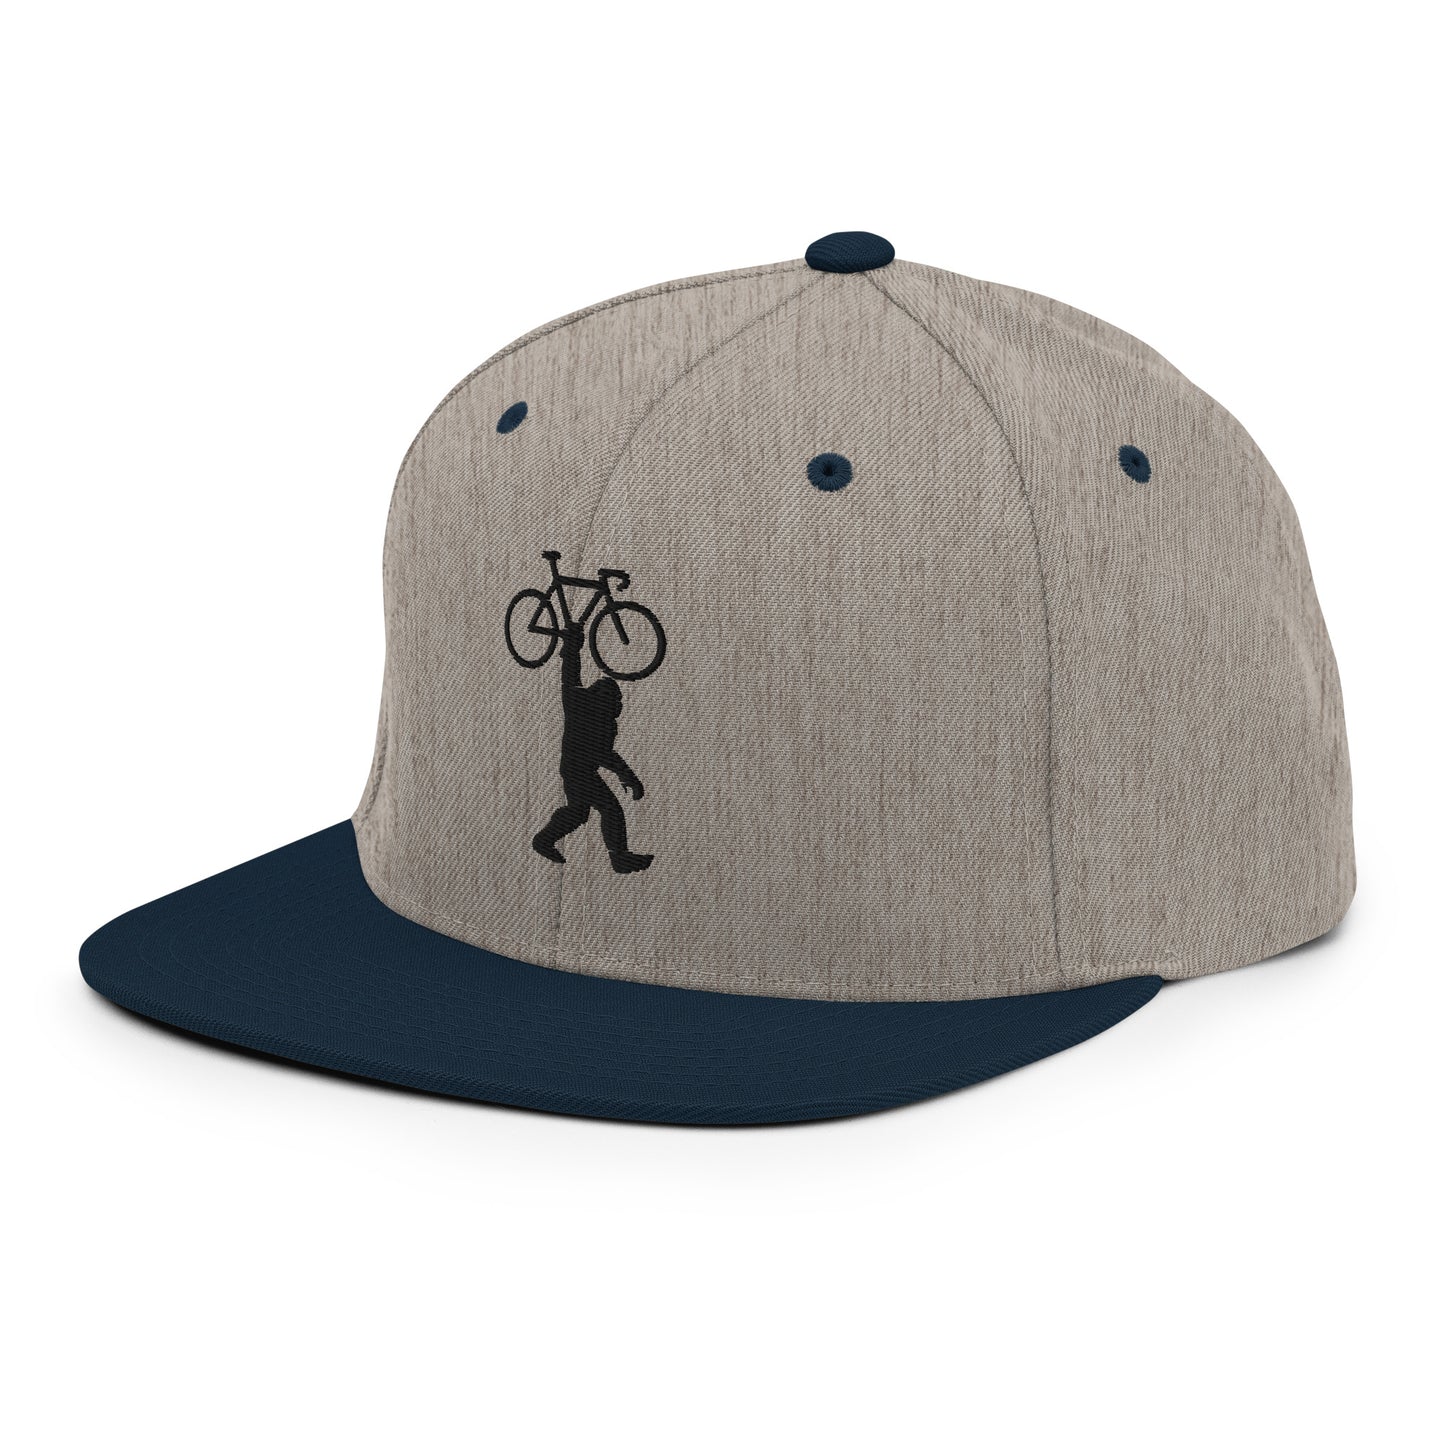 Bigfoot Sasquatch 3D Puff Embroidered Snapback Hat